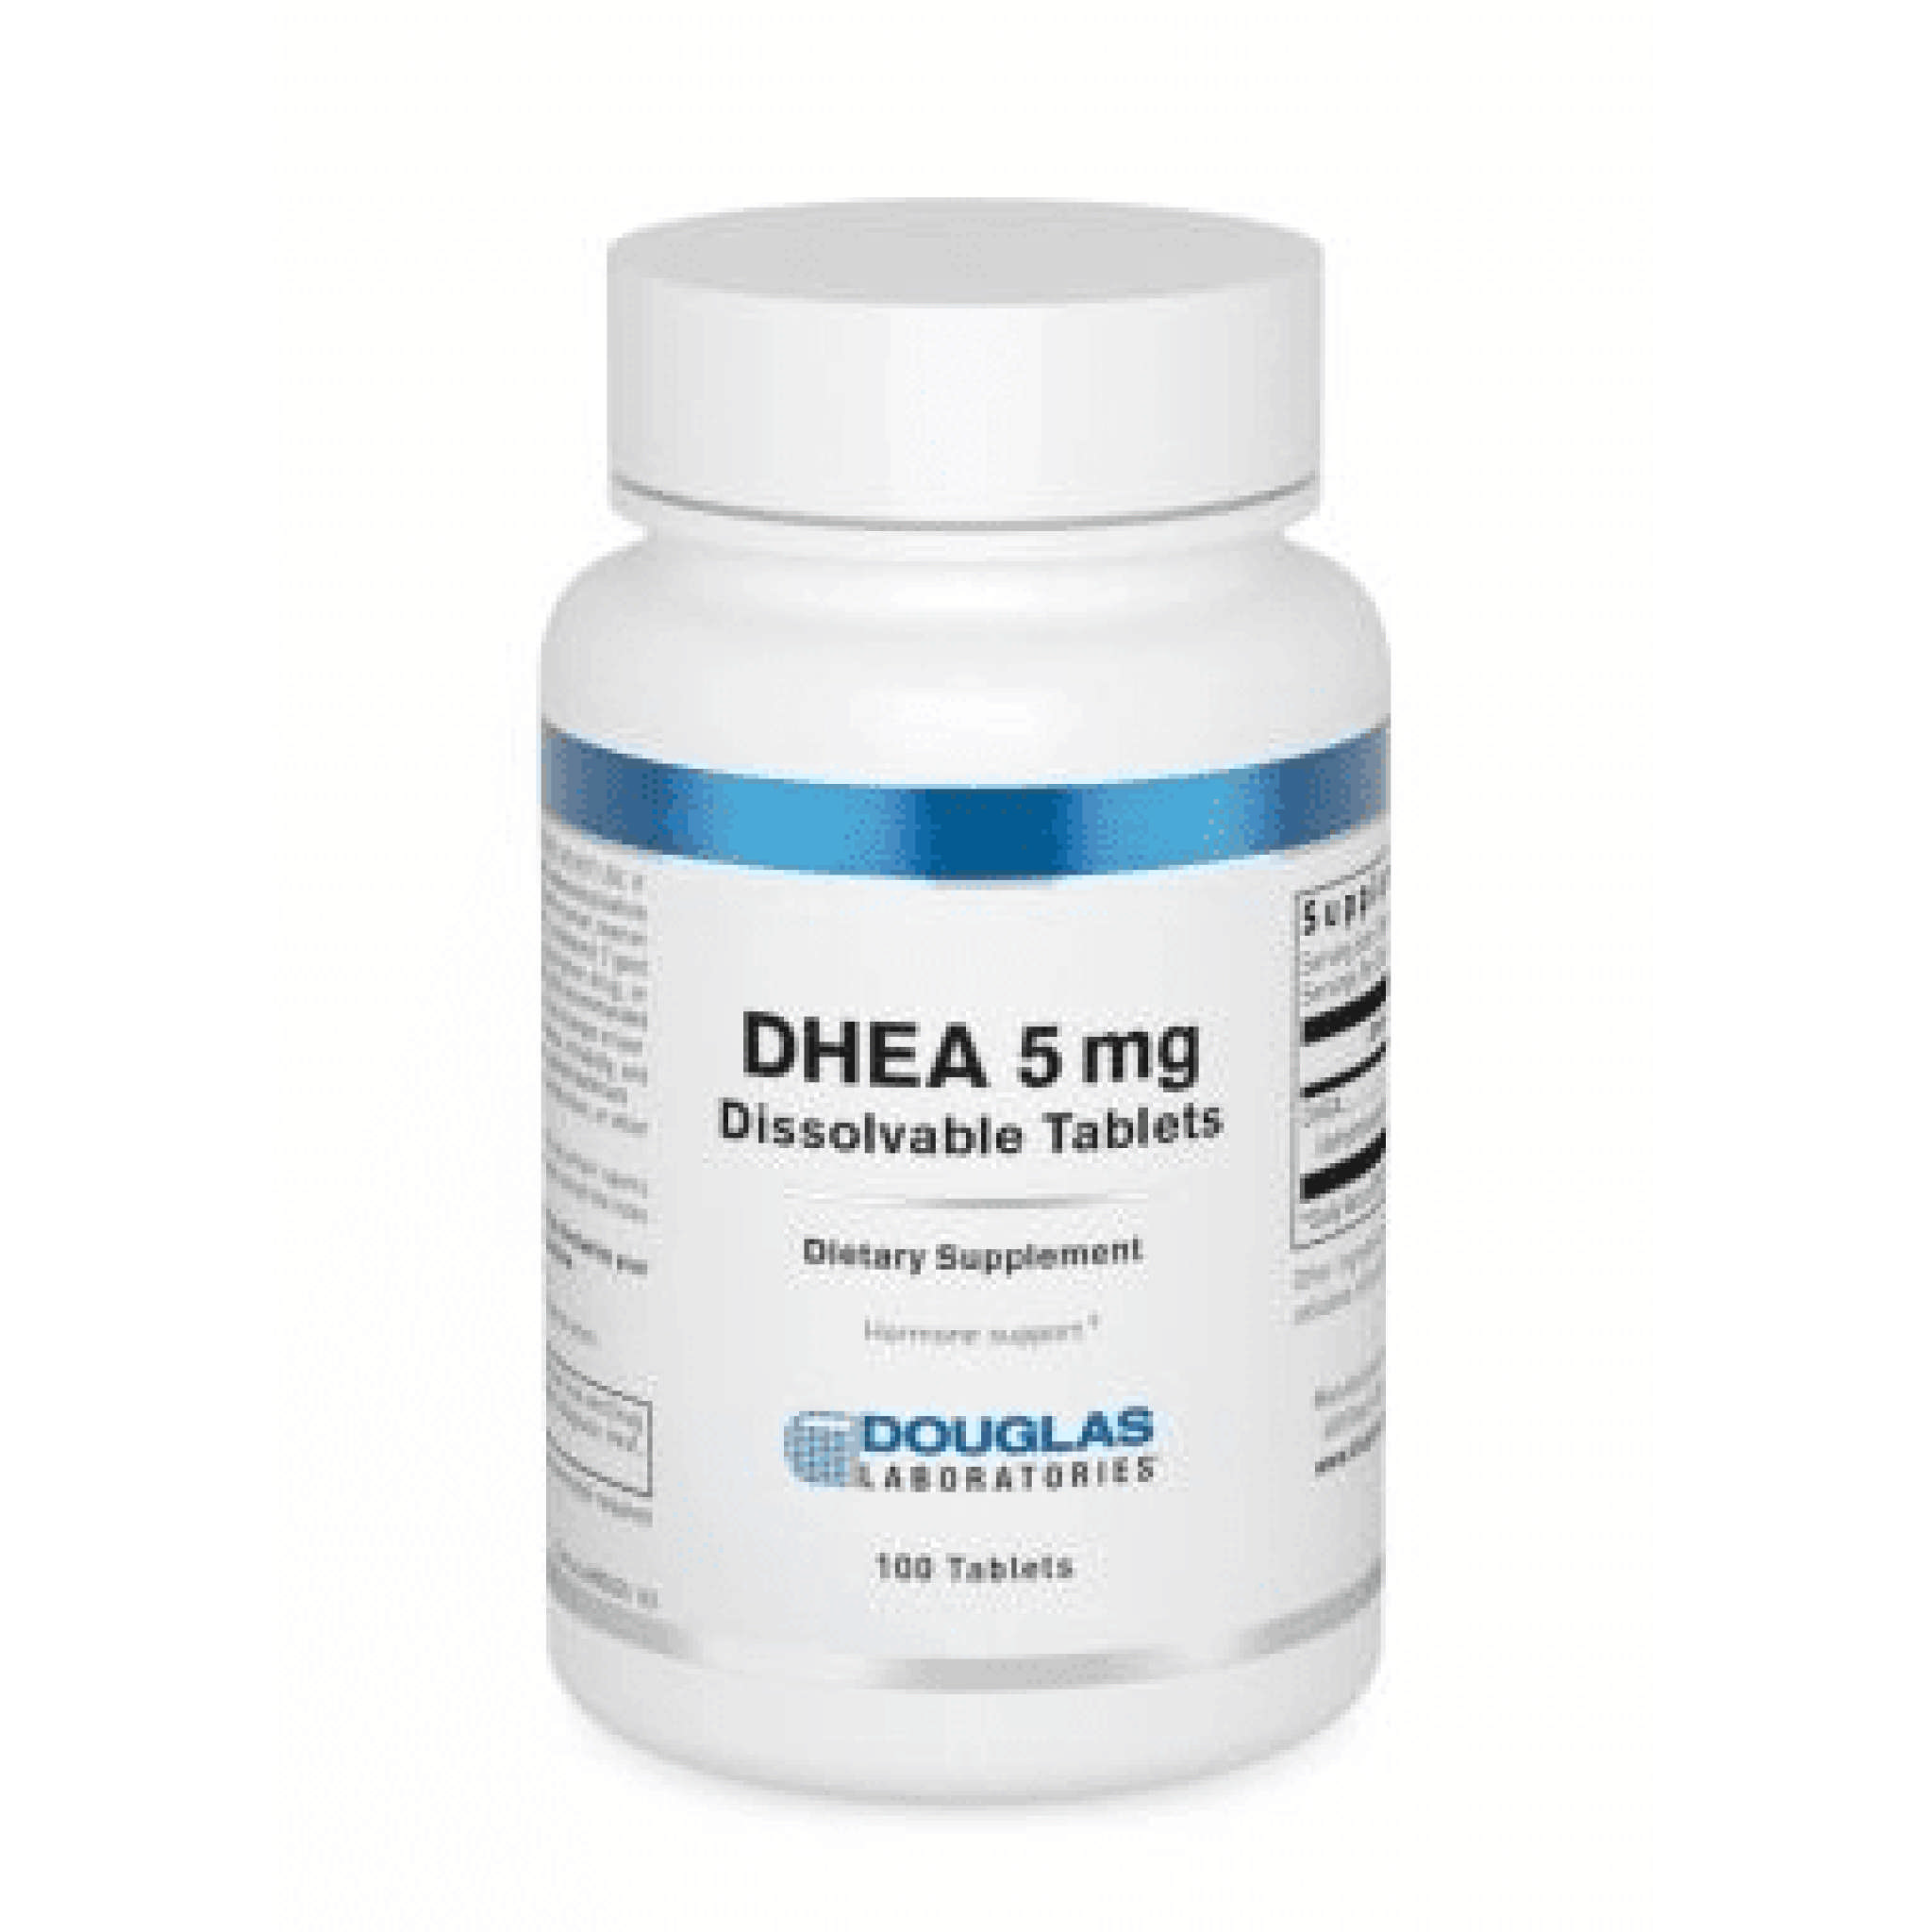 Douglas Laboratories - Dhea 5 mg Sublingual